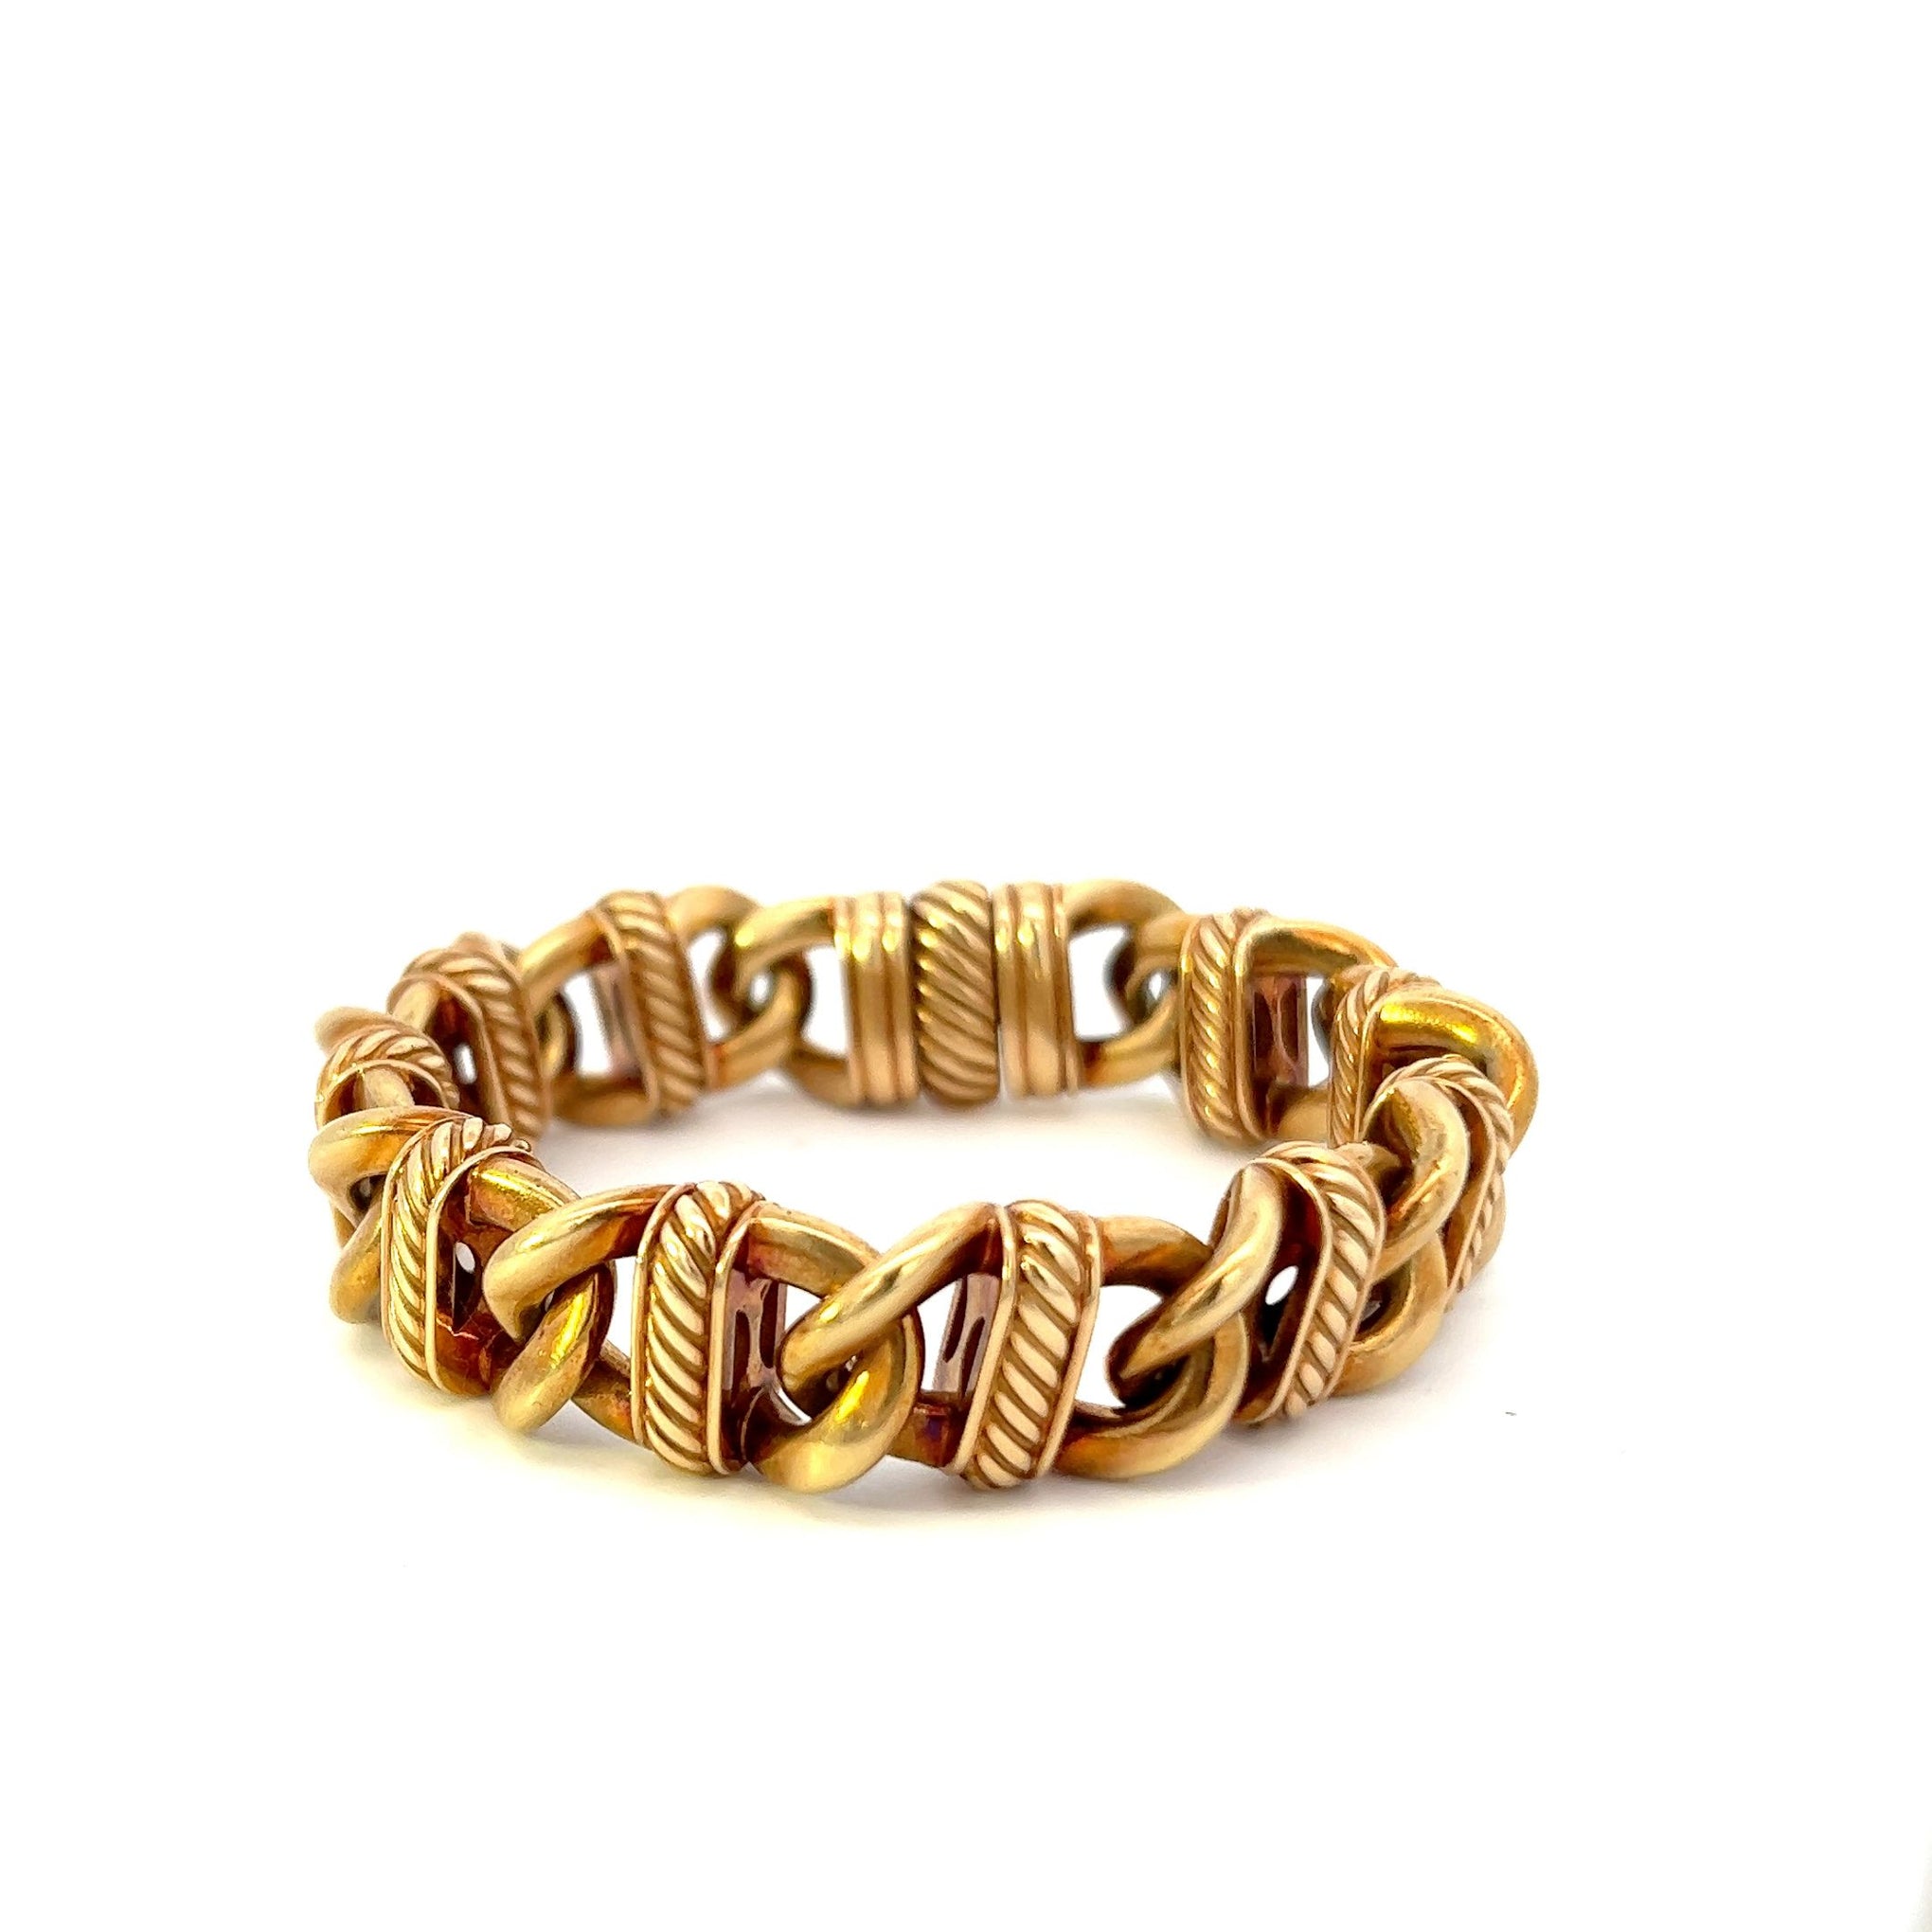 Vintage 18KT Yellow Gold Signed David Yurman Chain Link Bracelet